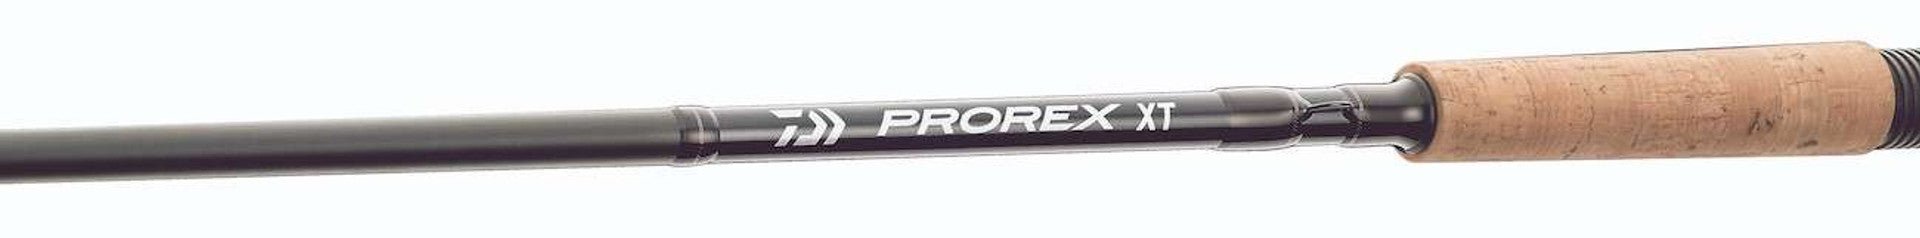 Daiwa Prorex XT Muskie Rod - Hamilton Bait and Tackle